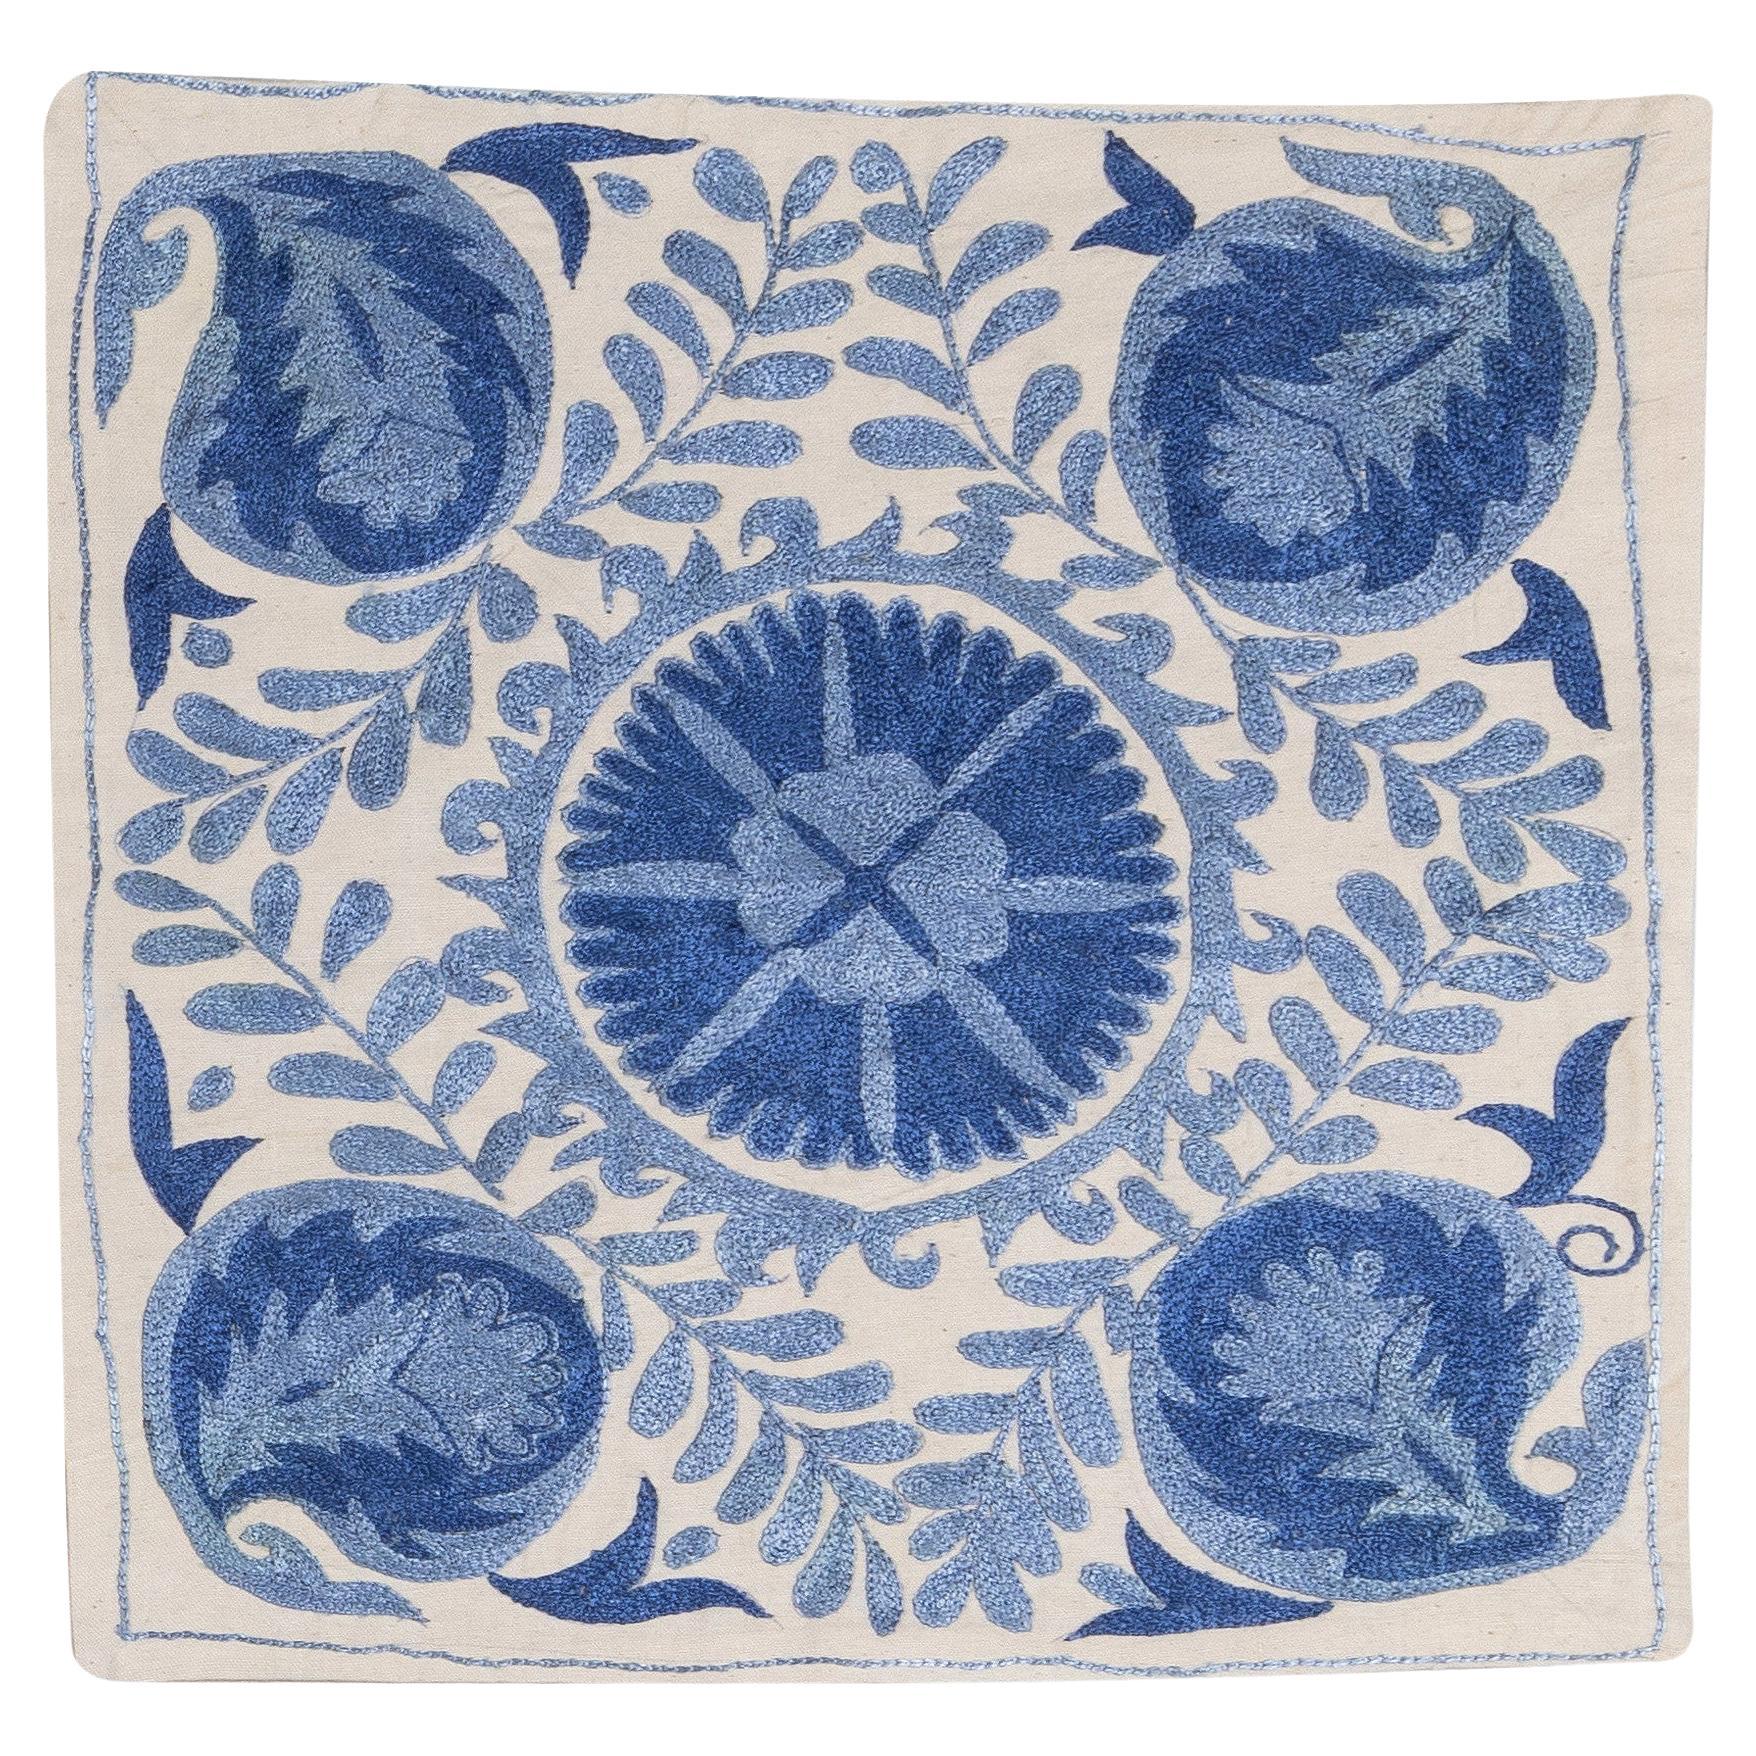 17"x17" Silk Embroidery Cushion Cover, Uzbek Throw Pillow Cover in Cream & Blue